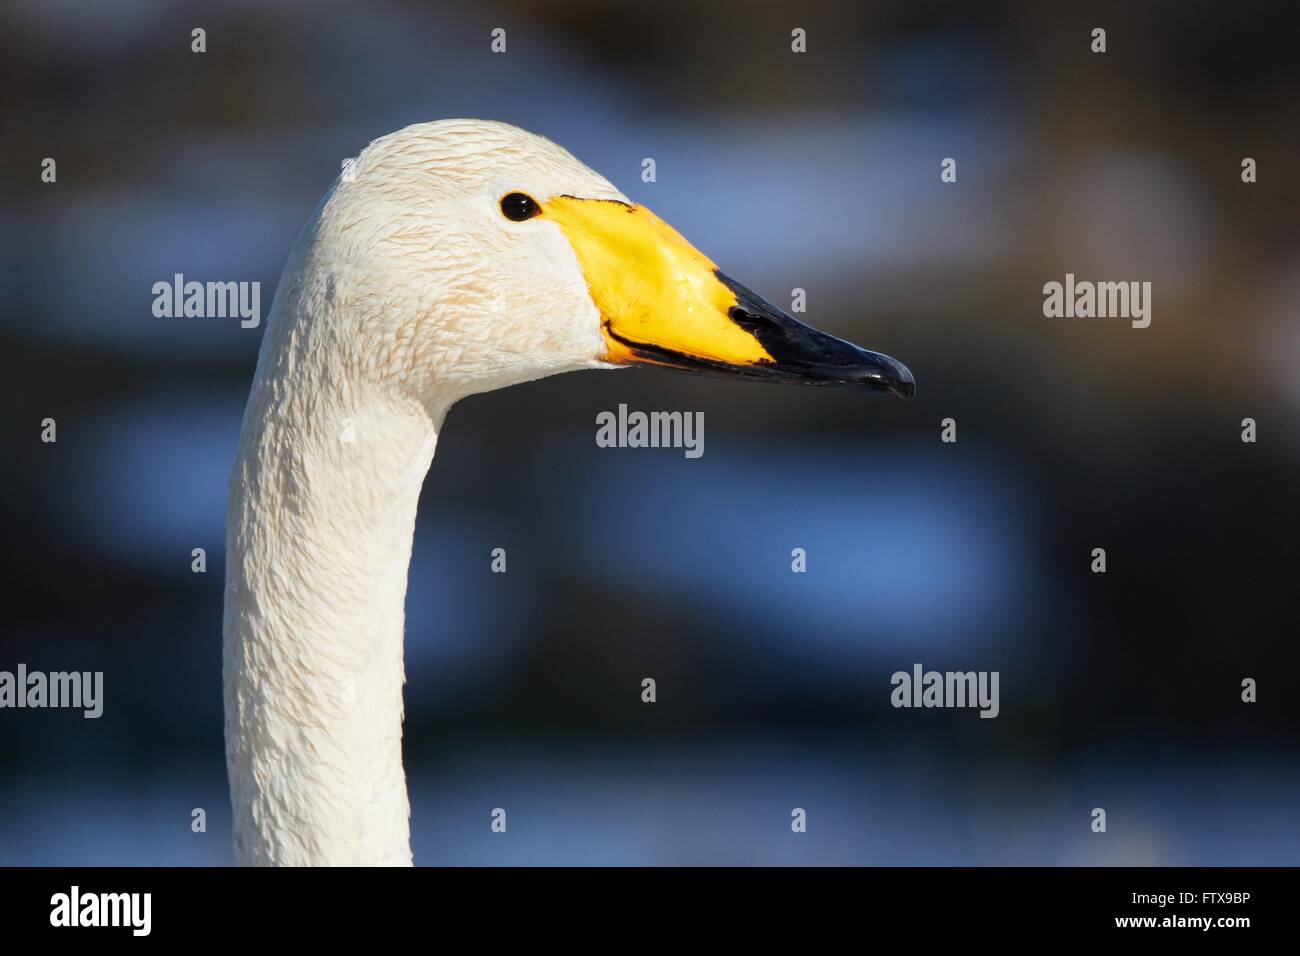 Whooper swan (Cygnus Cygnus) testa in closeup shot. Bellissimo uccello bianco sembra sorridente in primavera. Foto Stock